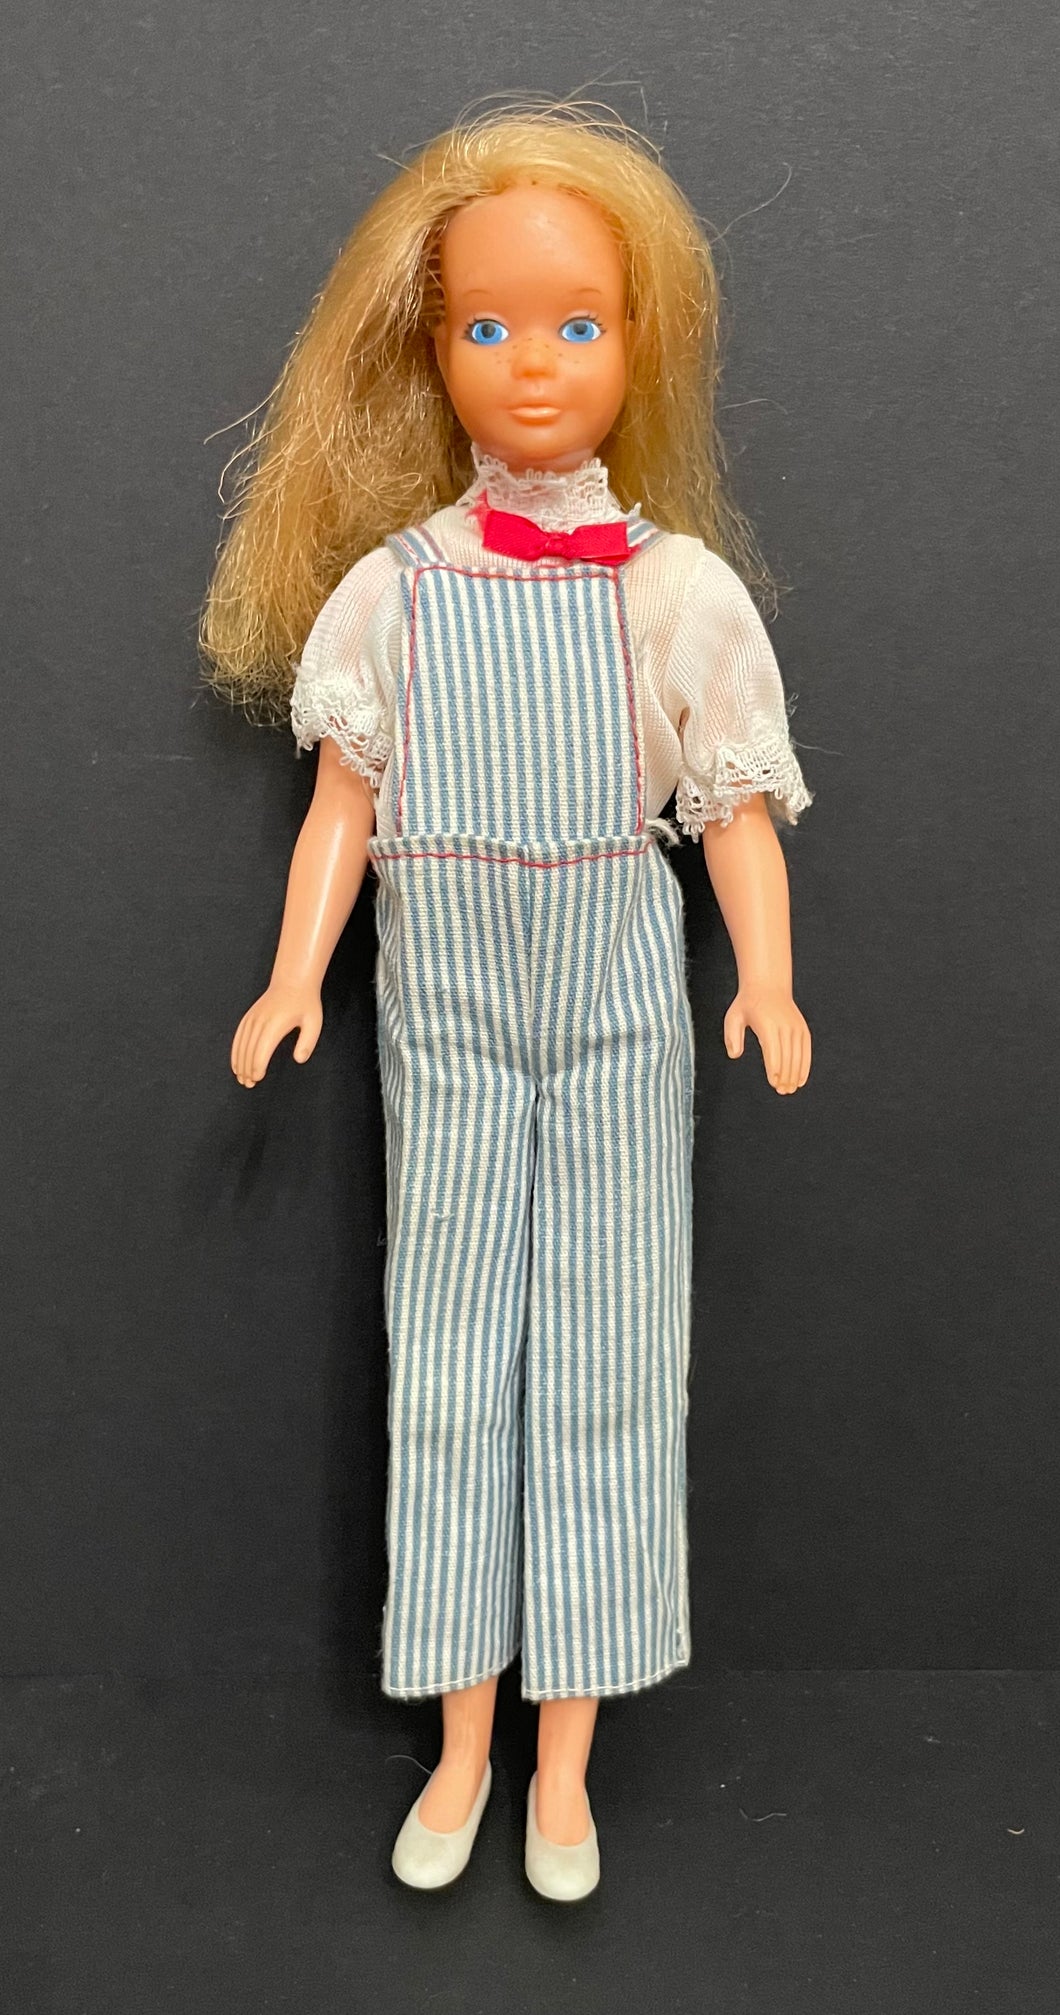 Vintage 1970s Skipper Doll with denim overalls